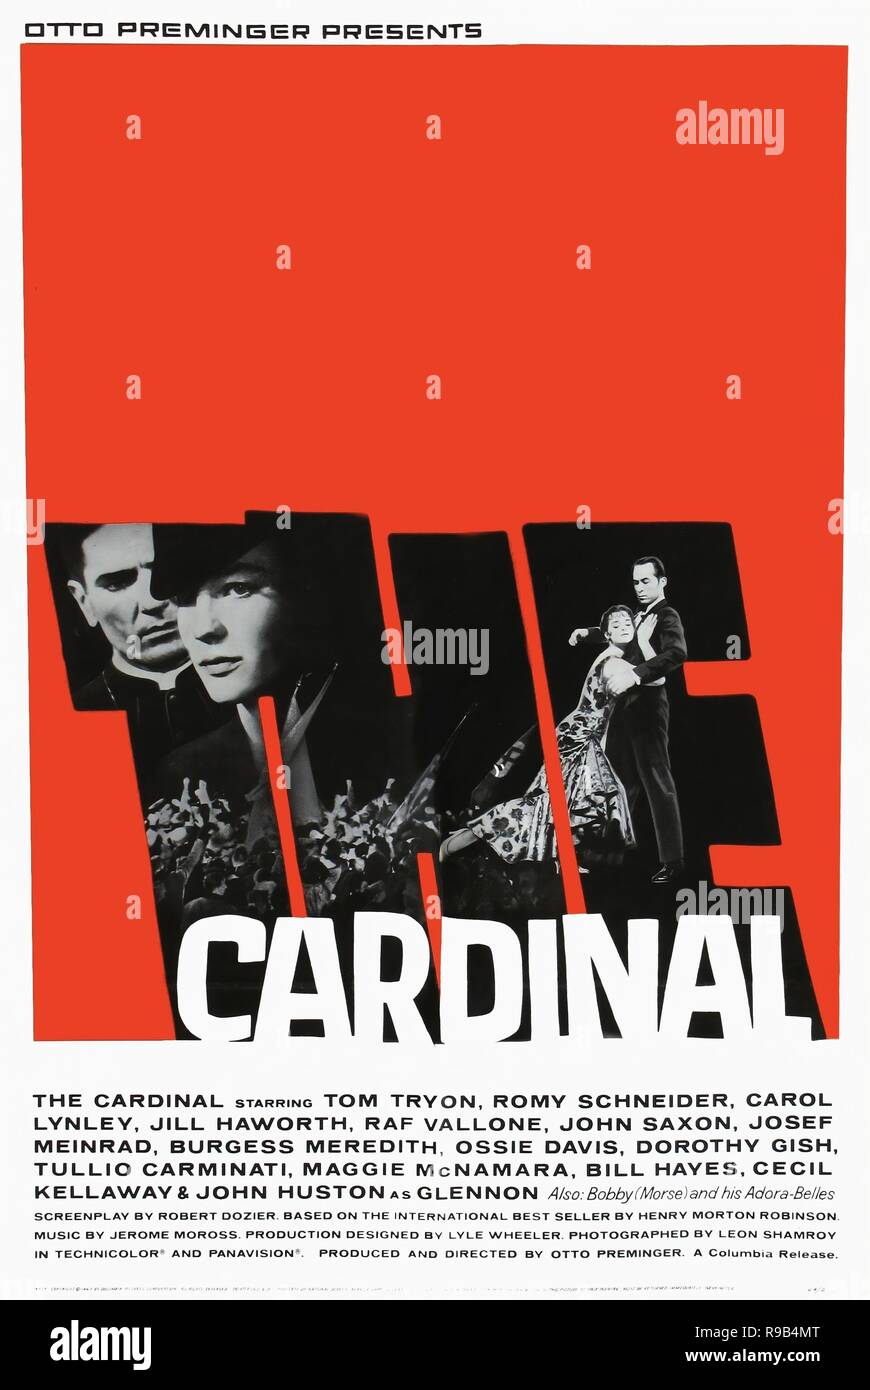 Original film title: THE CARDINAL. English title: THE CARDINAL. Year: 1963. Director: OTTO PREMINGER. Credit: COLUMBIA/PREMINGER/GAMMA / Album Stock Photo